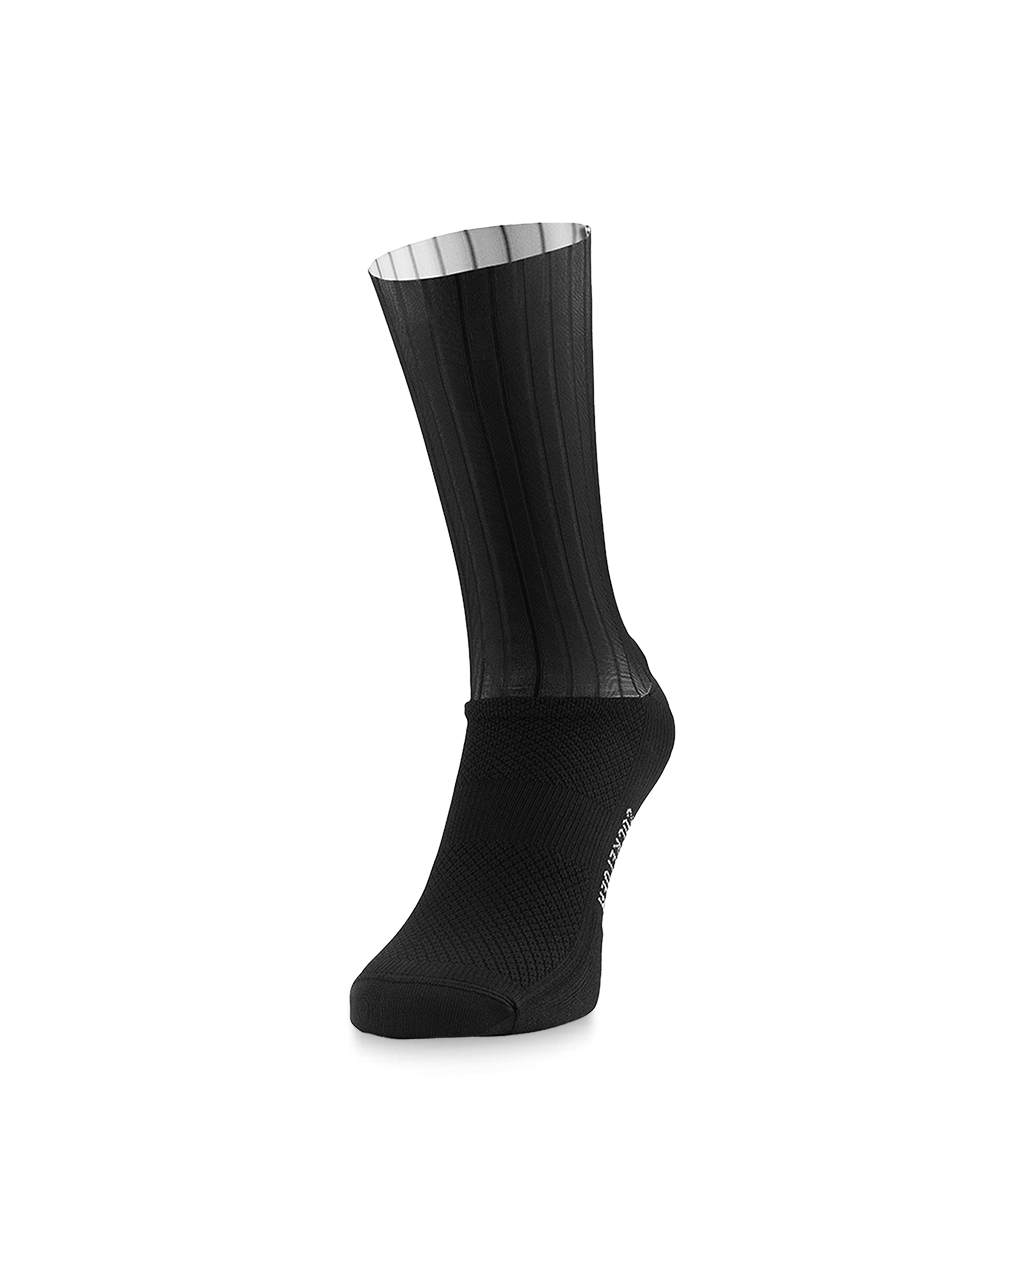 Black-sockeloen-aero-cycling-socks-3-pack